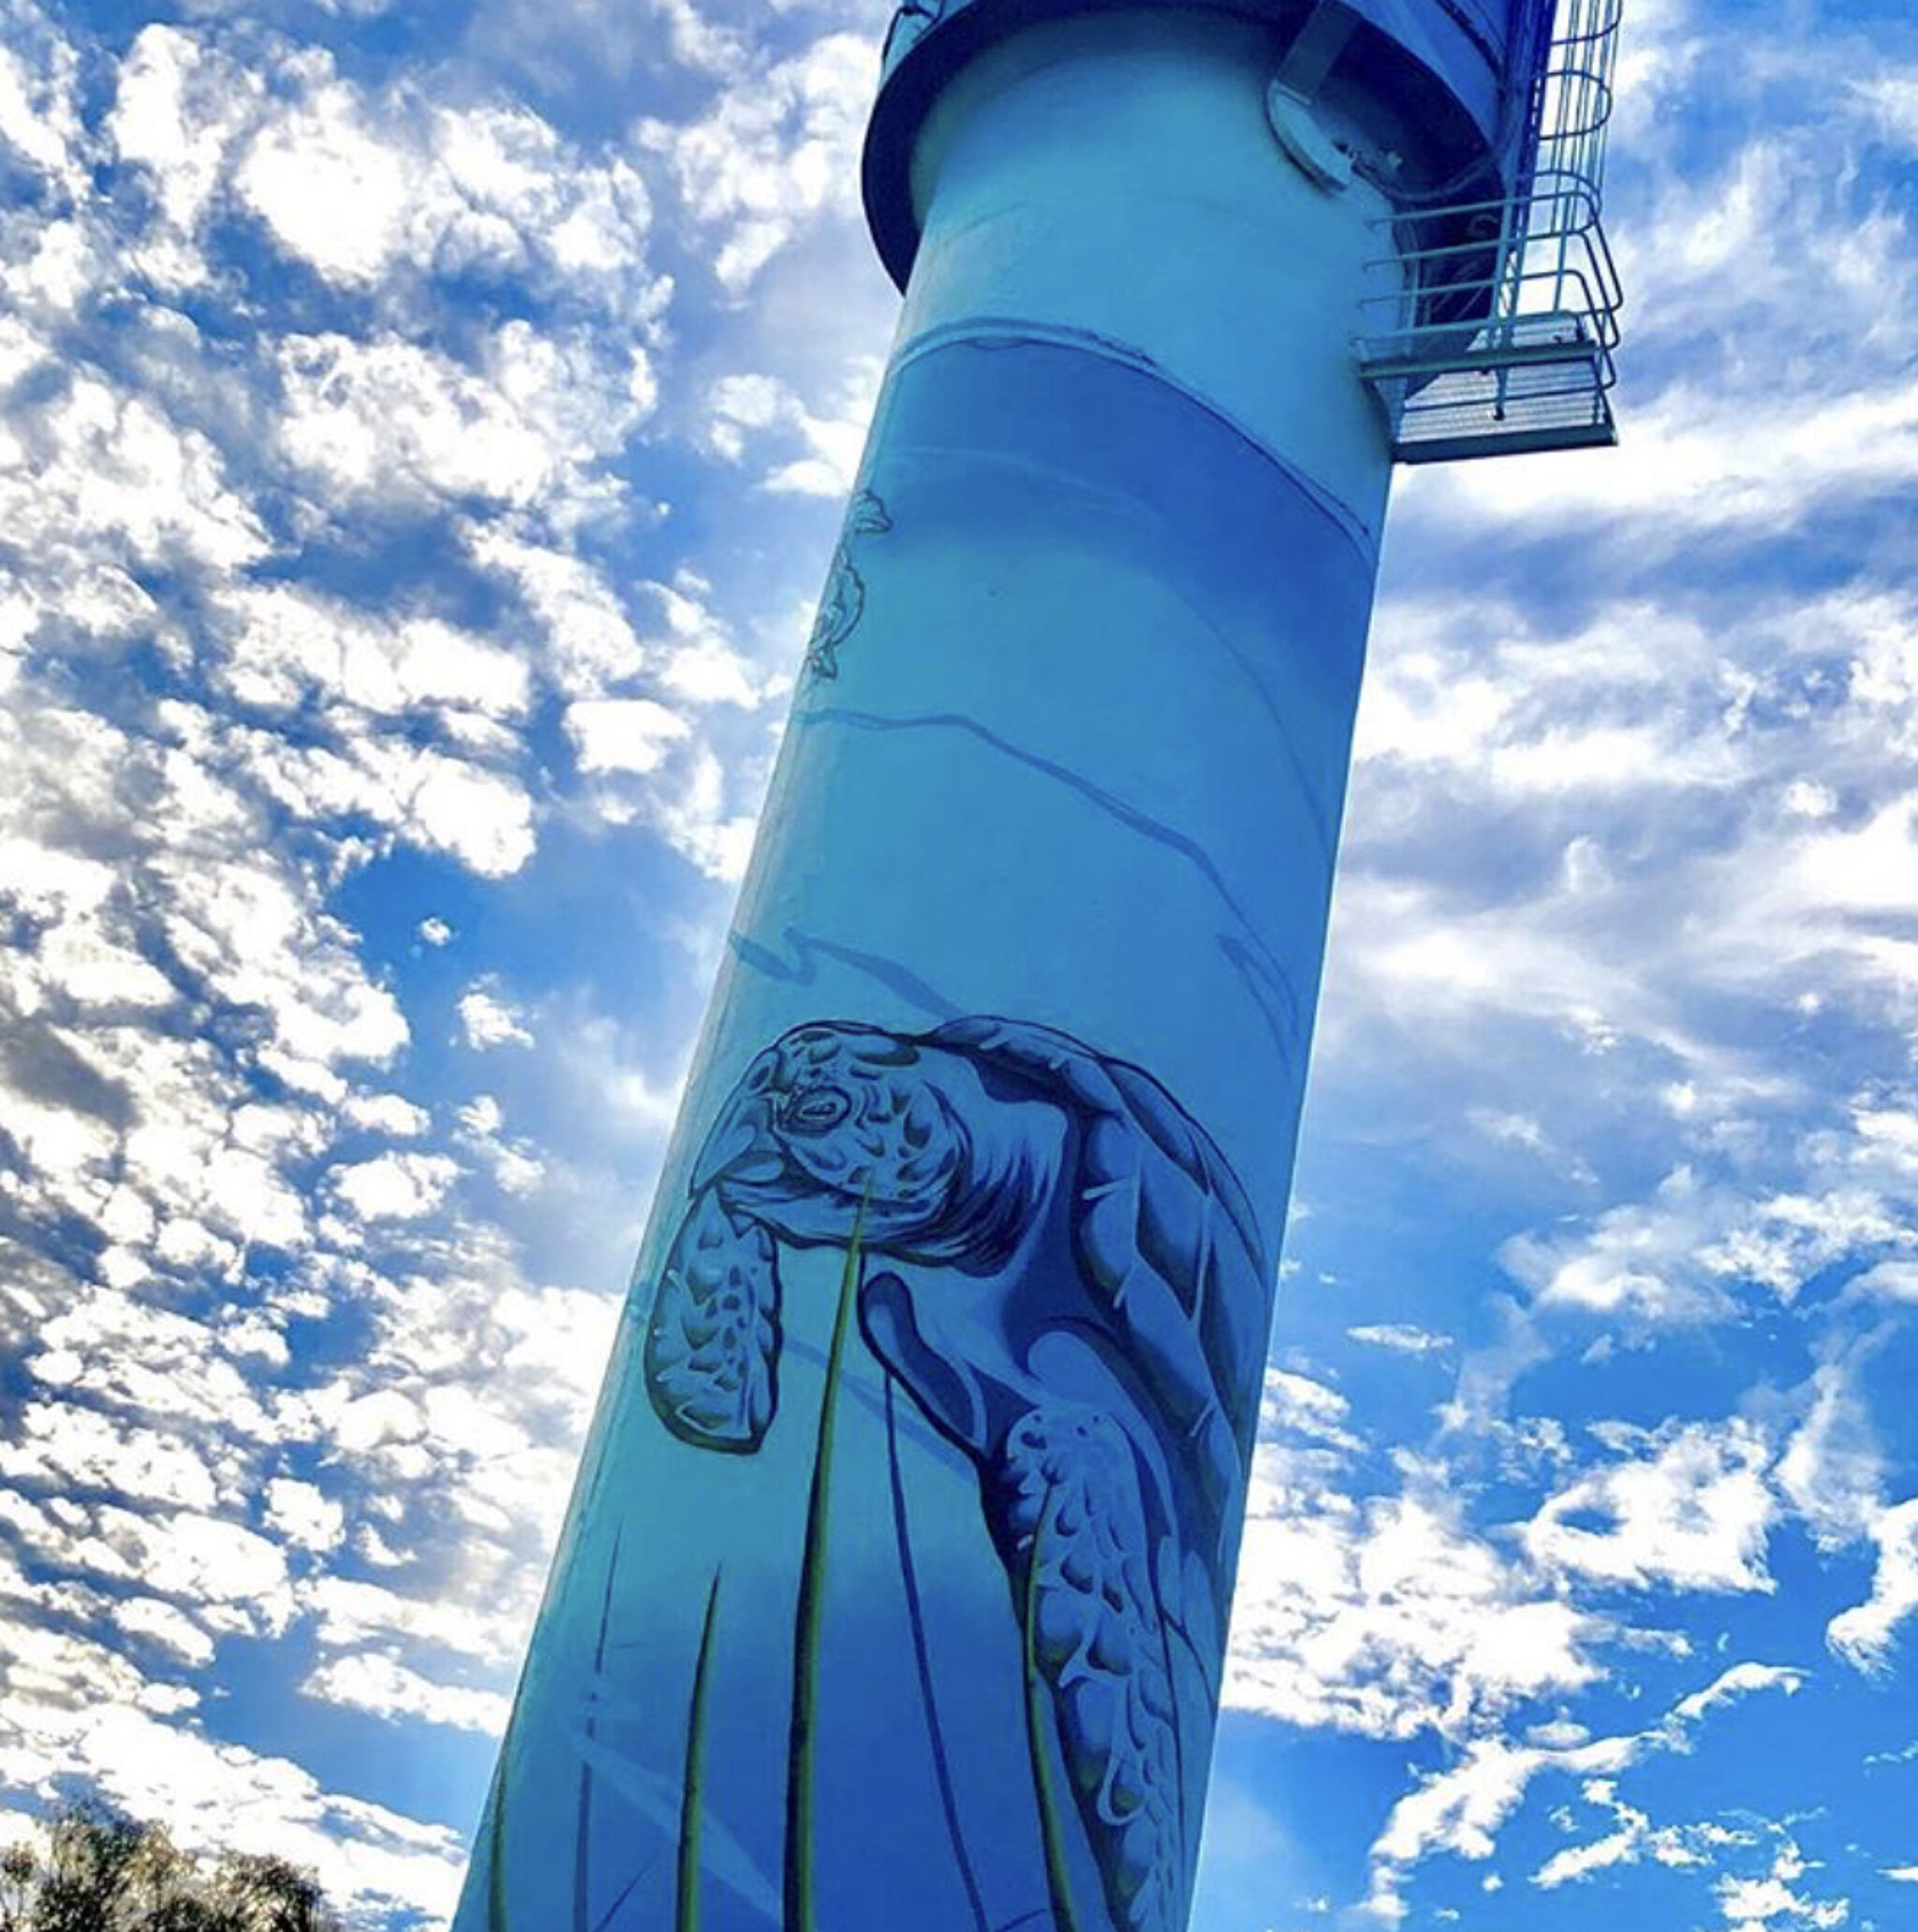 Australian Silo Art Trail, Street Art Murals Australia&mdash;Bongaree Water Tower Art